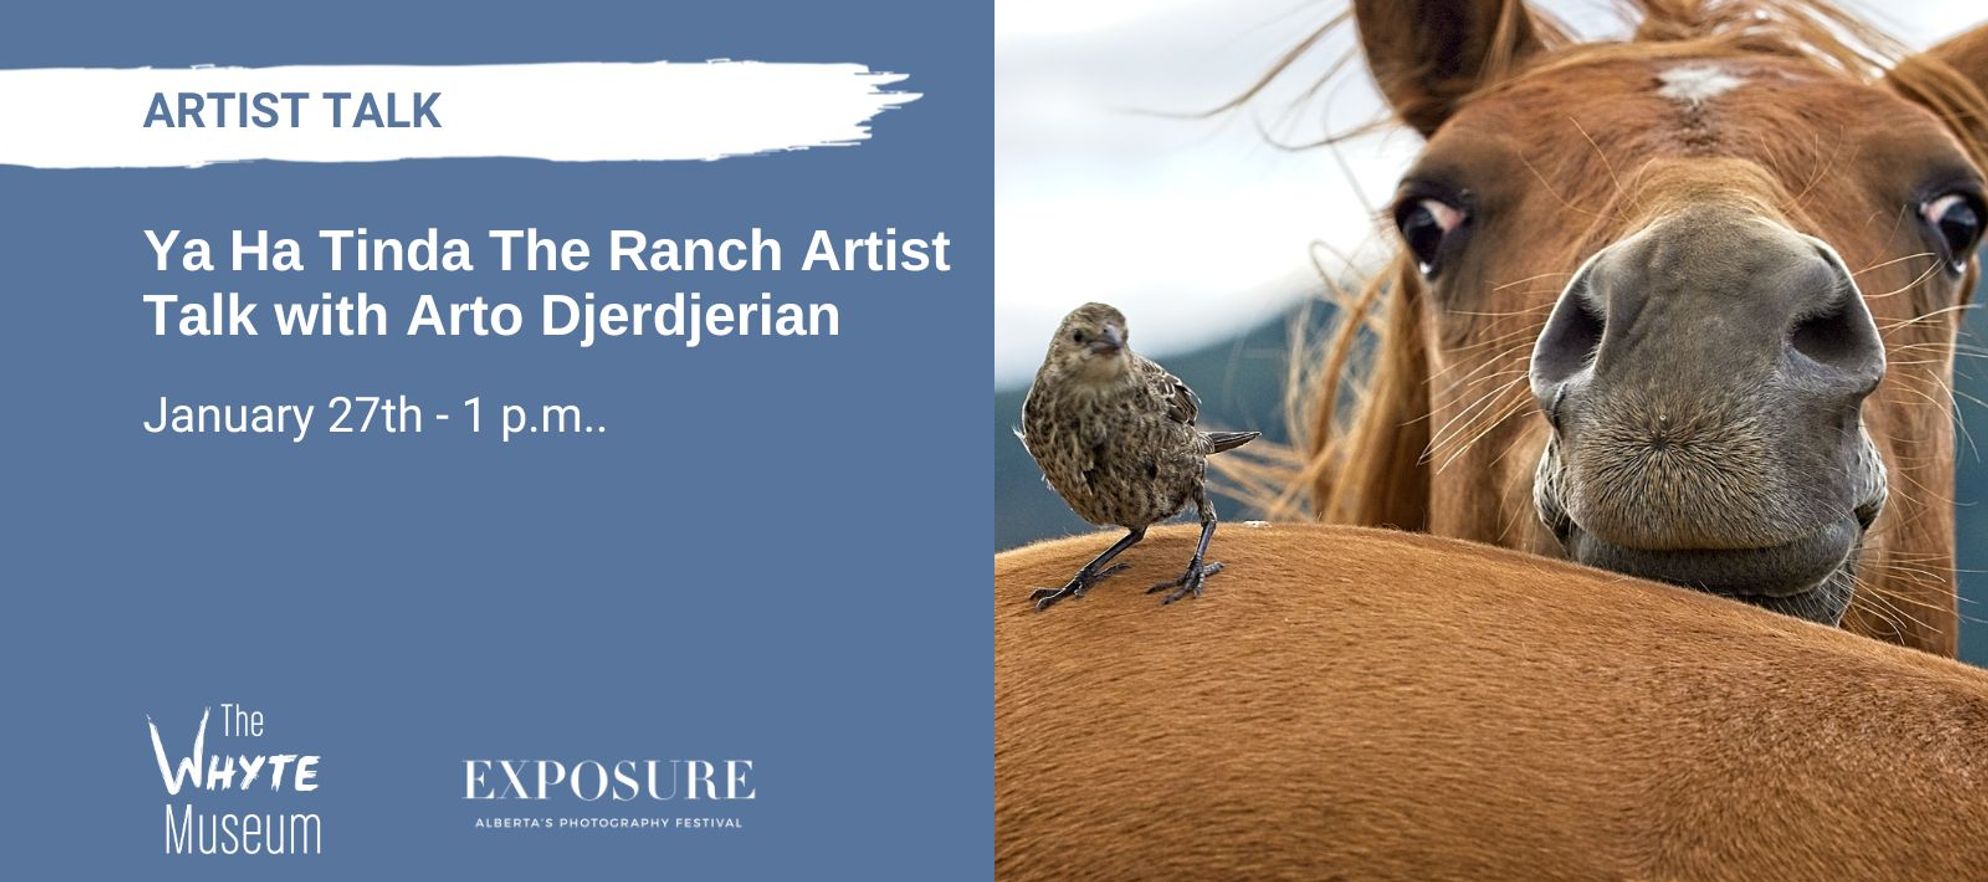  Ya Ha Tinda Ranch: Artist Talk with Arto Djerdjerian 